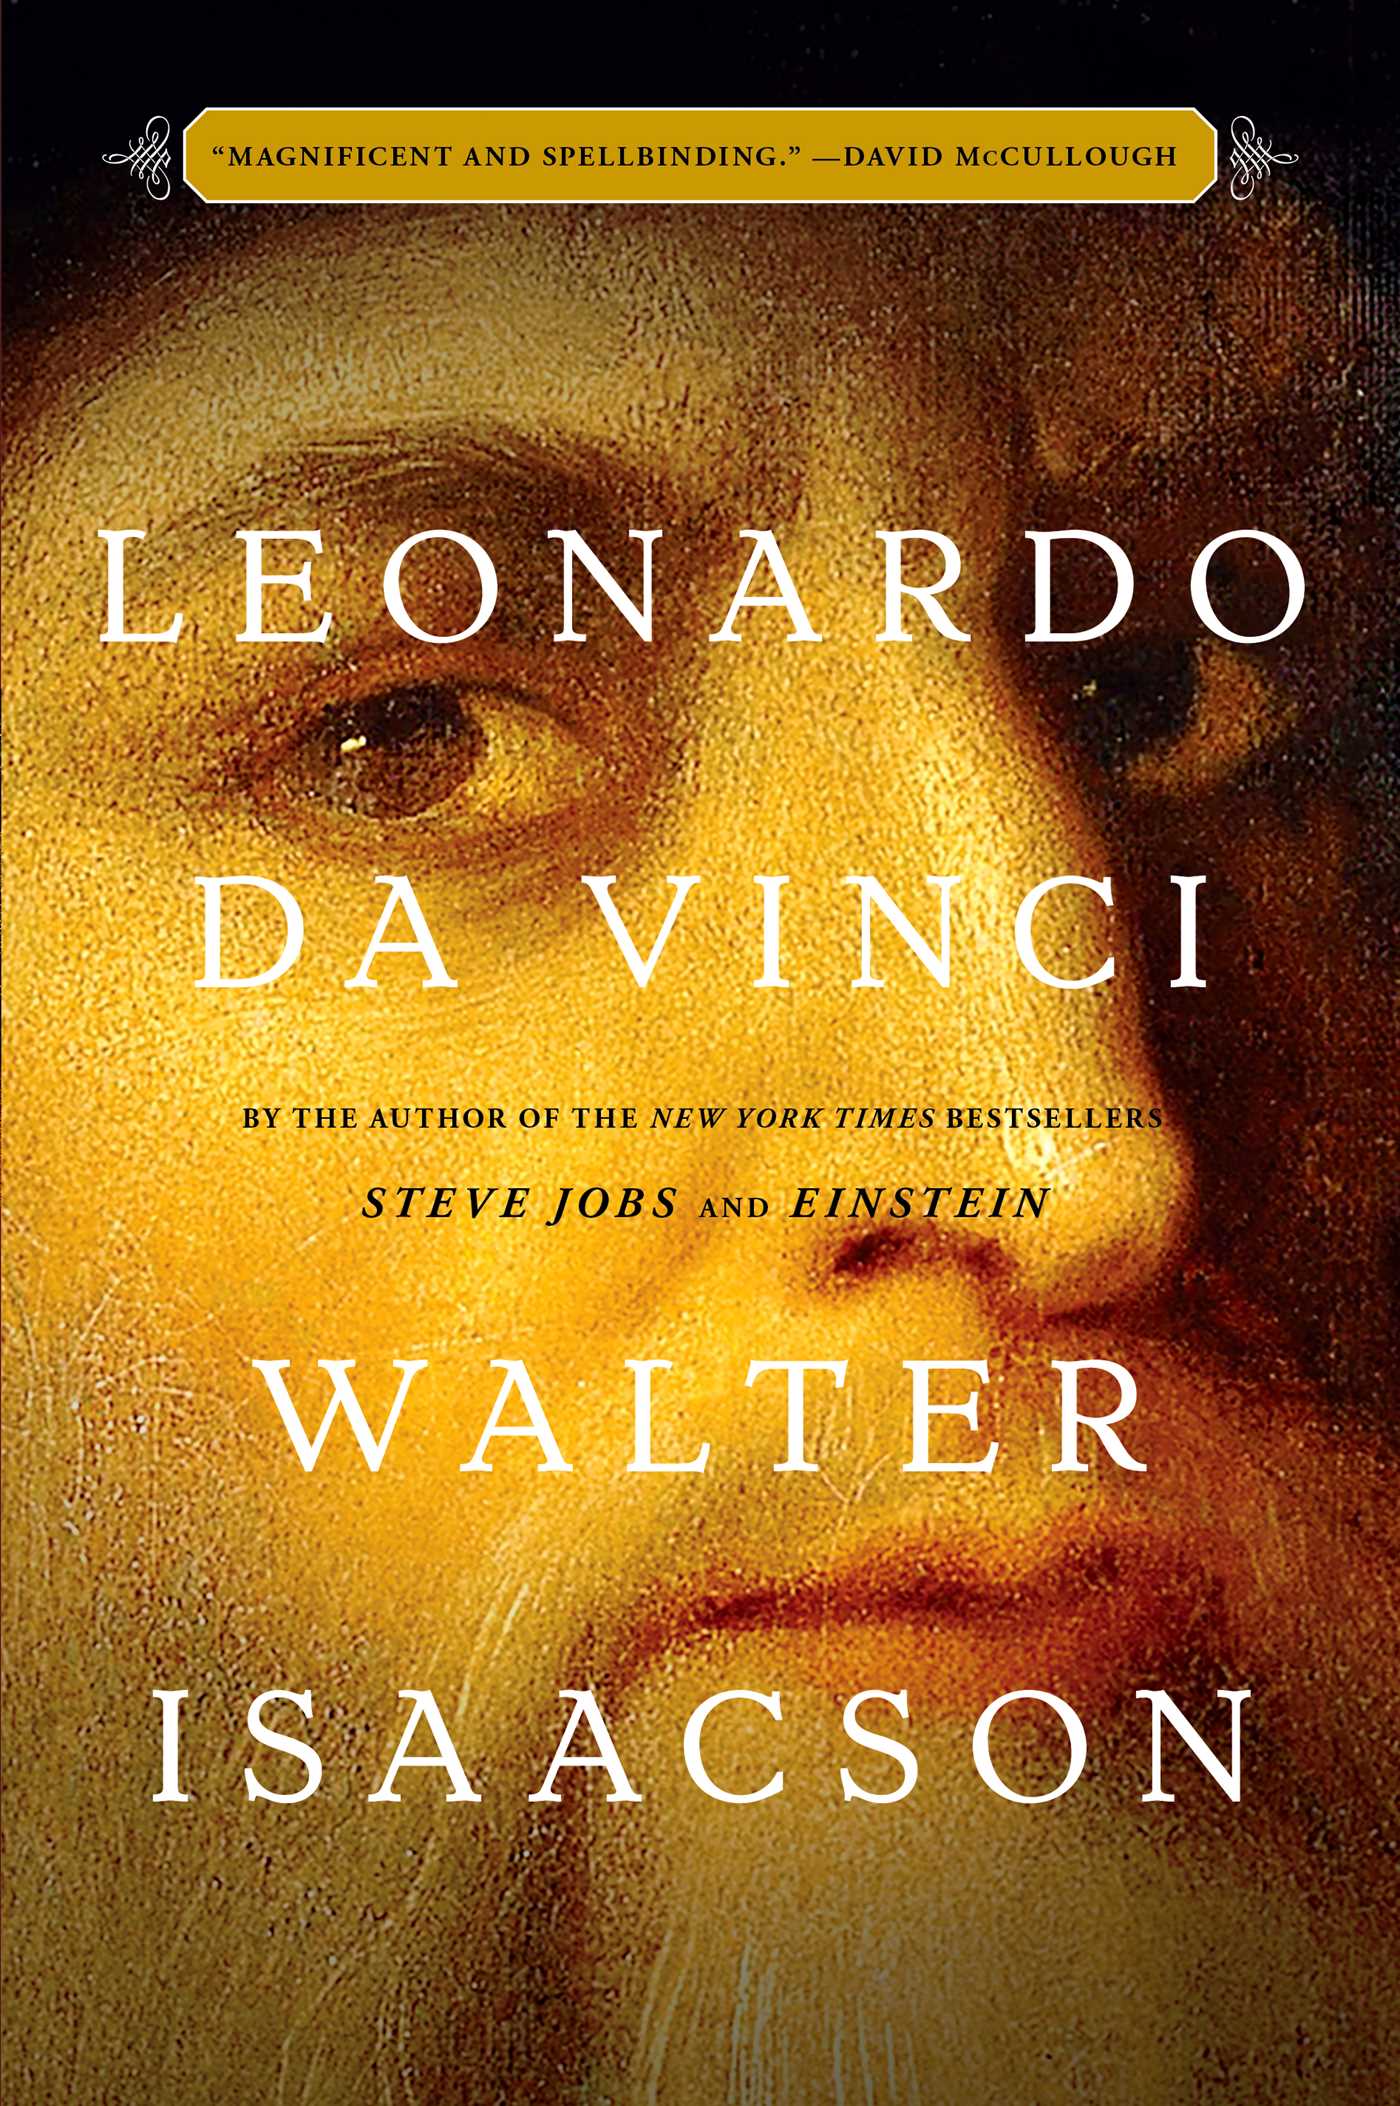 Book cover of Leonardo da vinci written by Walter Isaacson.